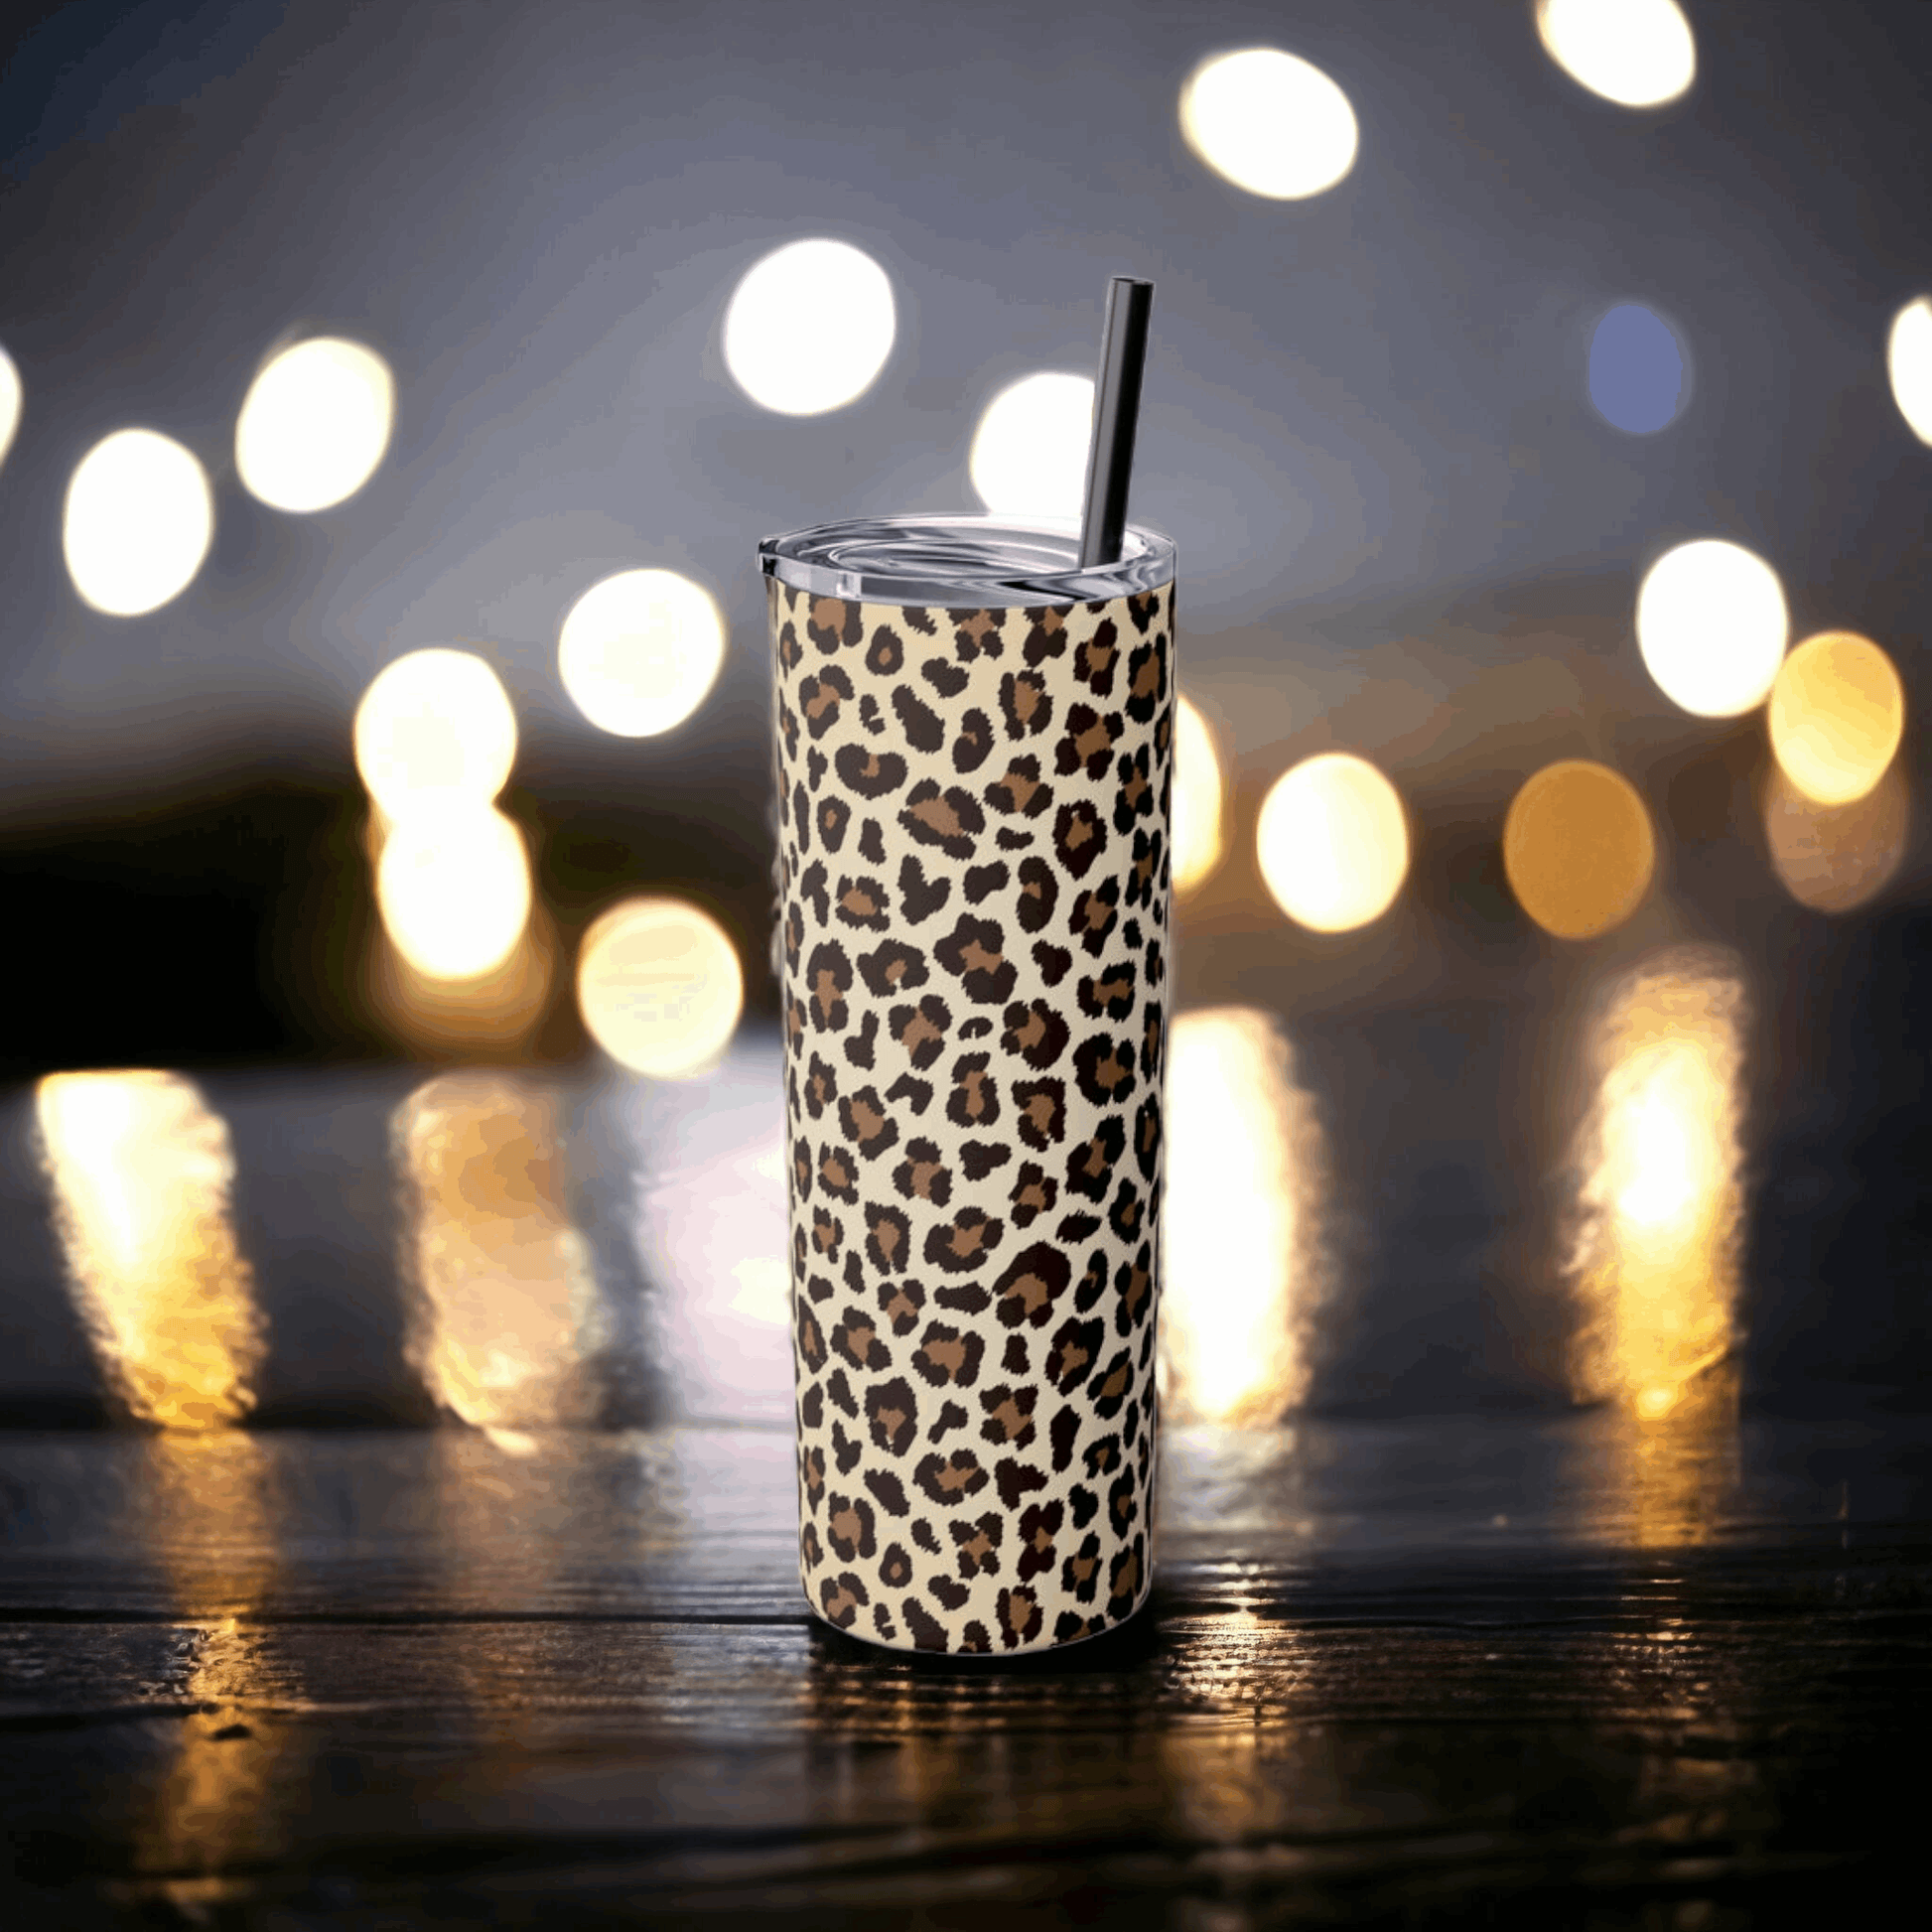 Leopard - Skinny Tumbler with Straw, 20oz Matte / Smooth Black / 20oz